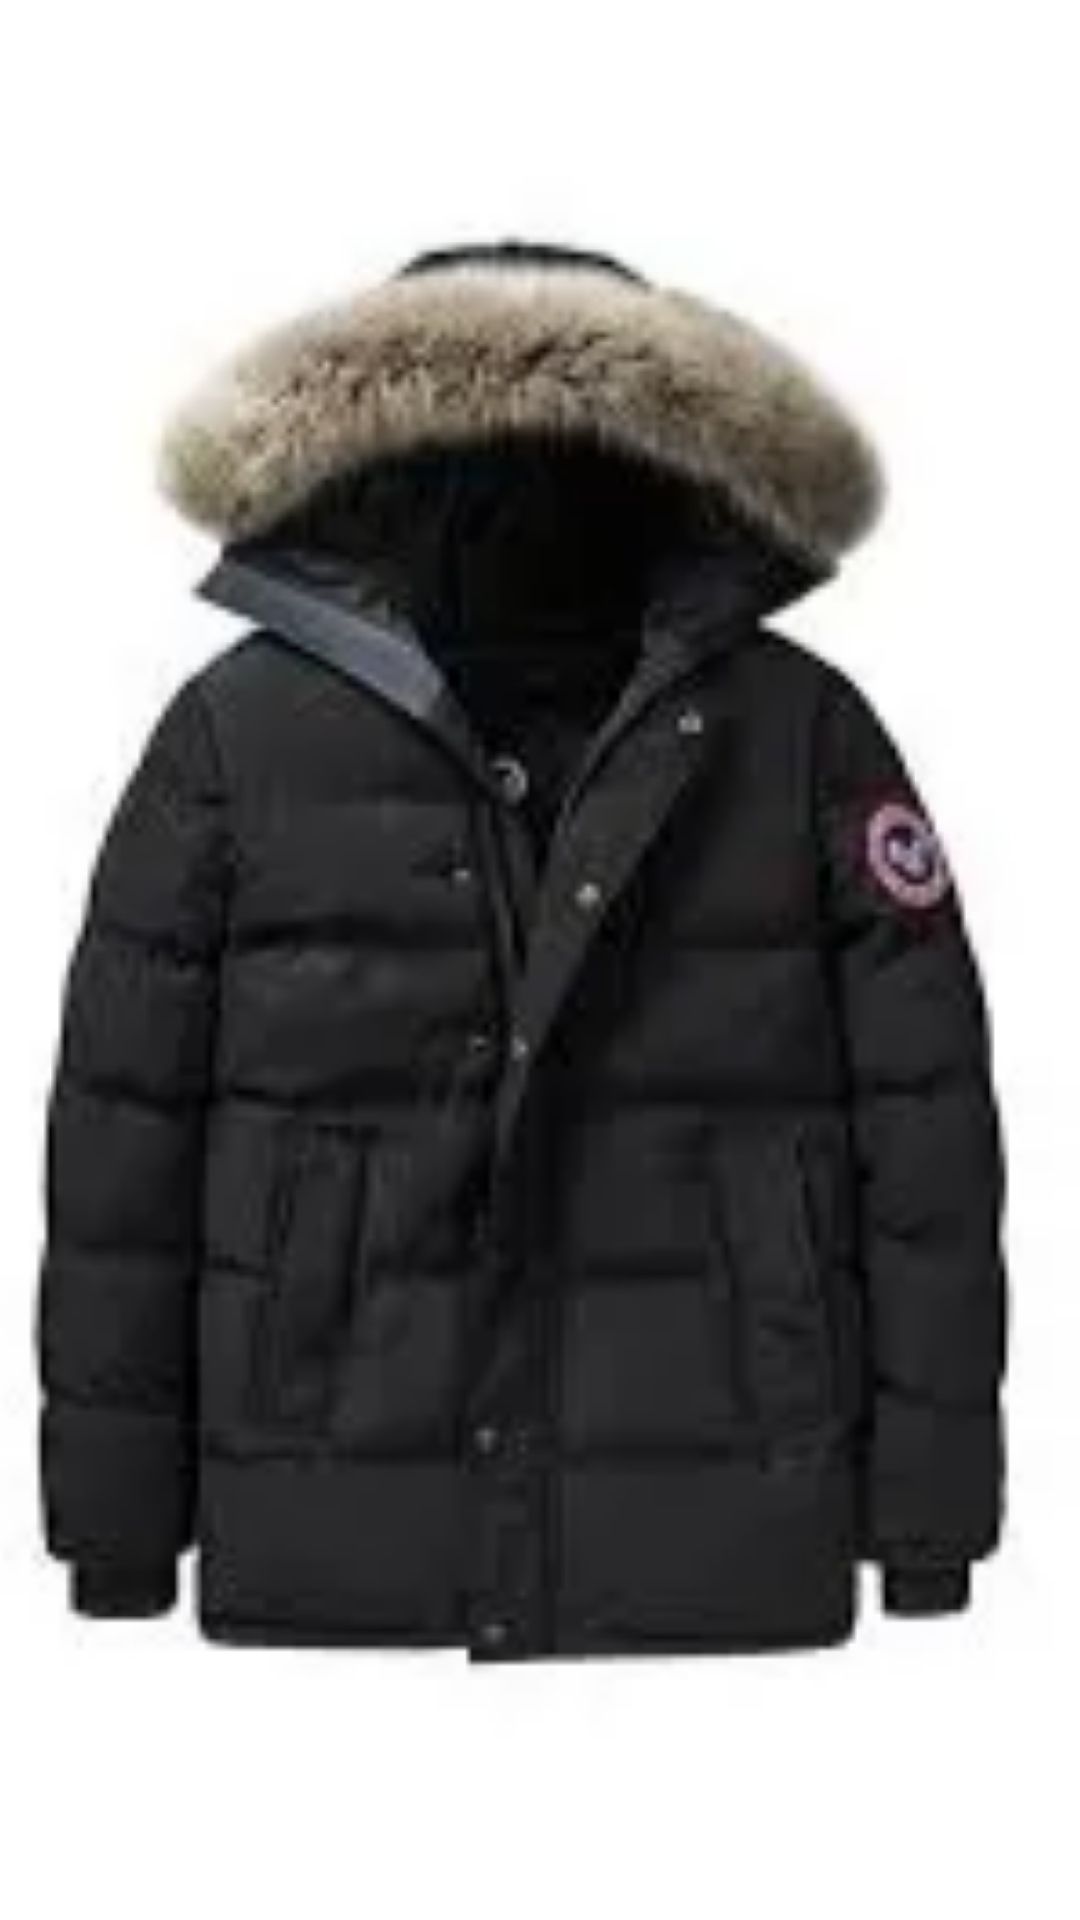 Real Fur Jacket Men: A Pinnacle of Style and Warmth